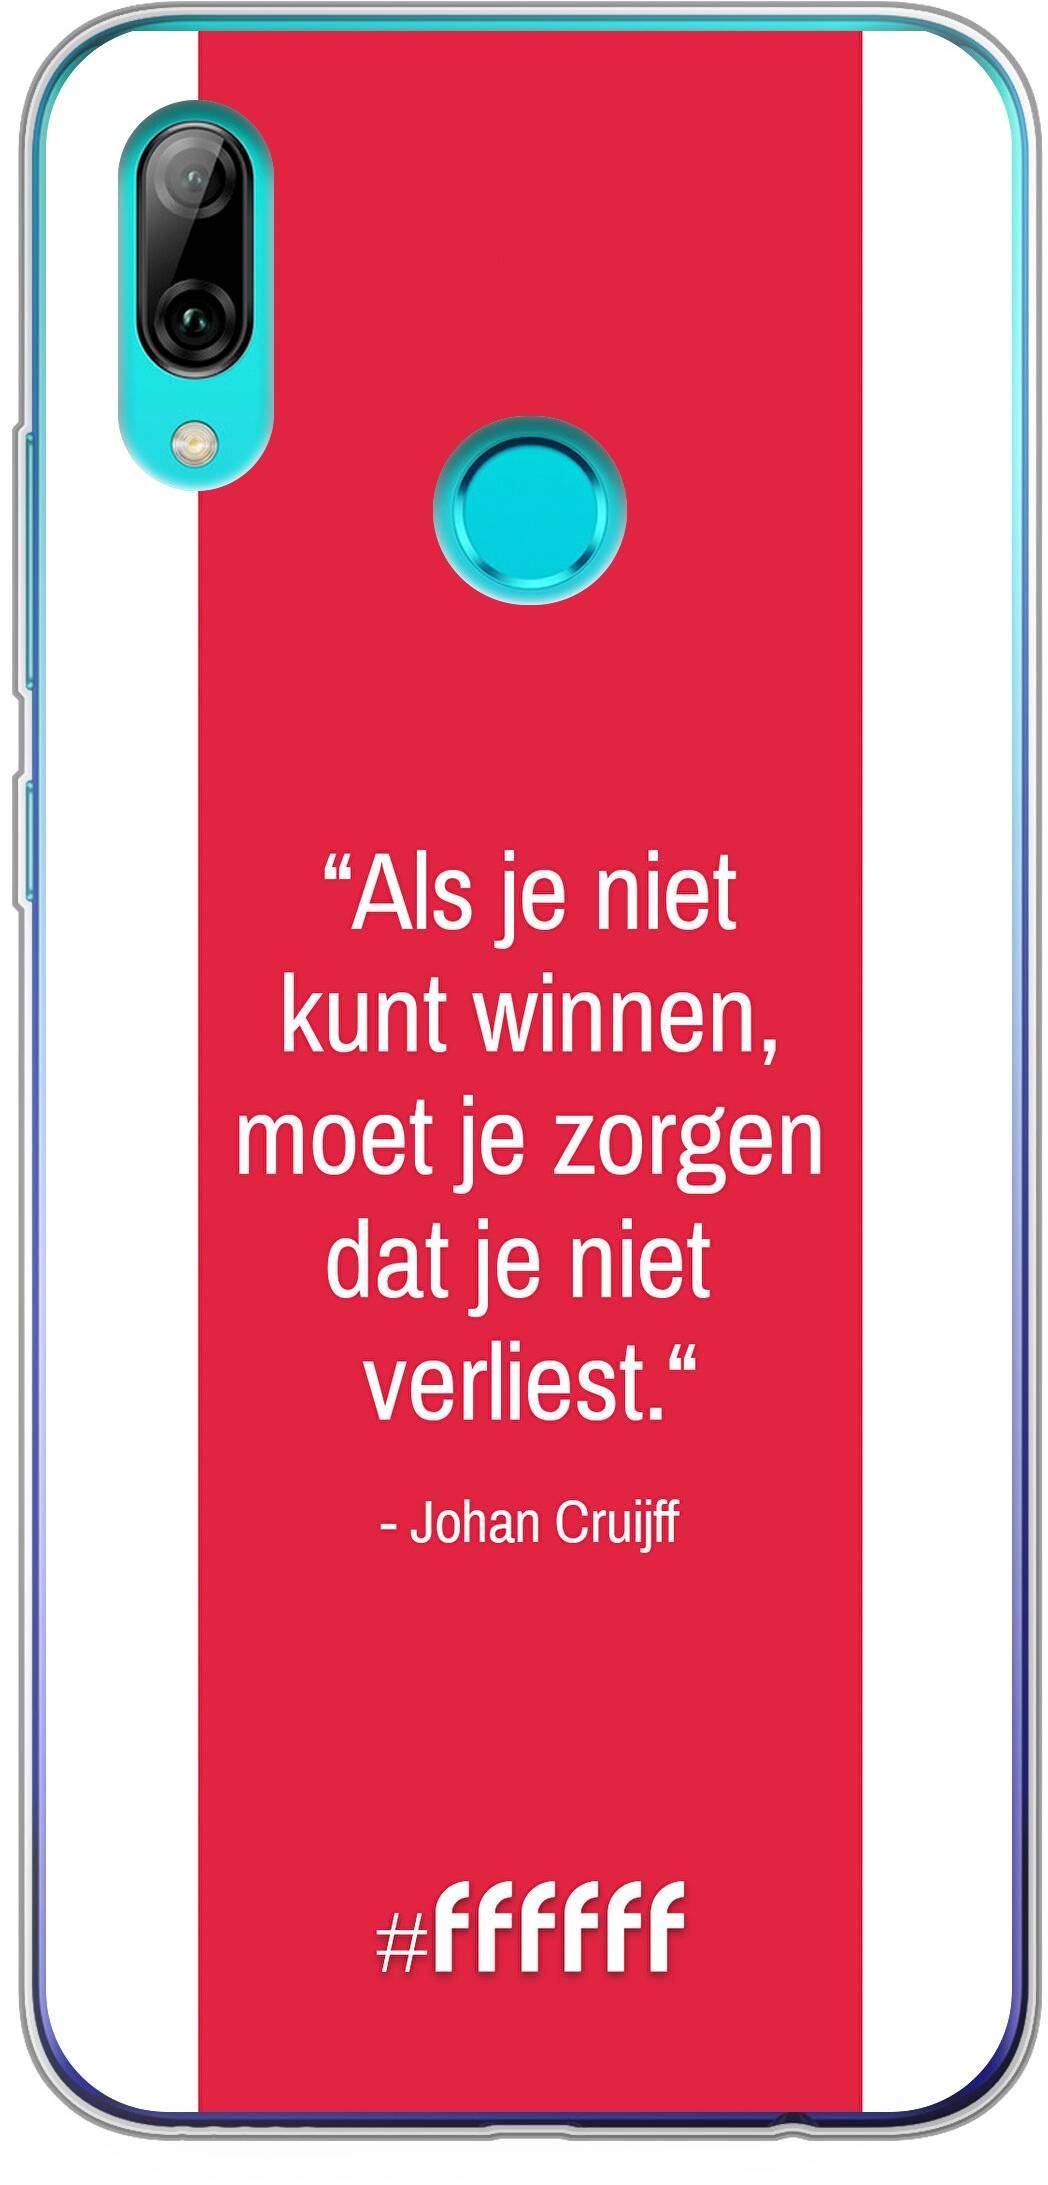 AFC Ajax Quote Johan Cruijff P Smart (2019)